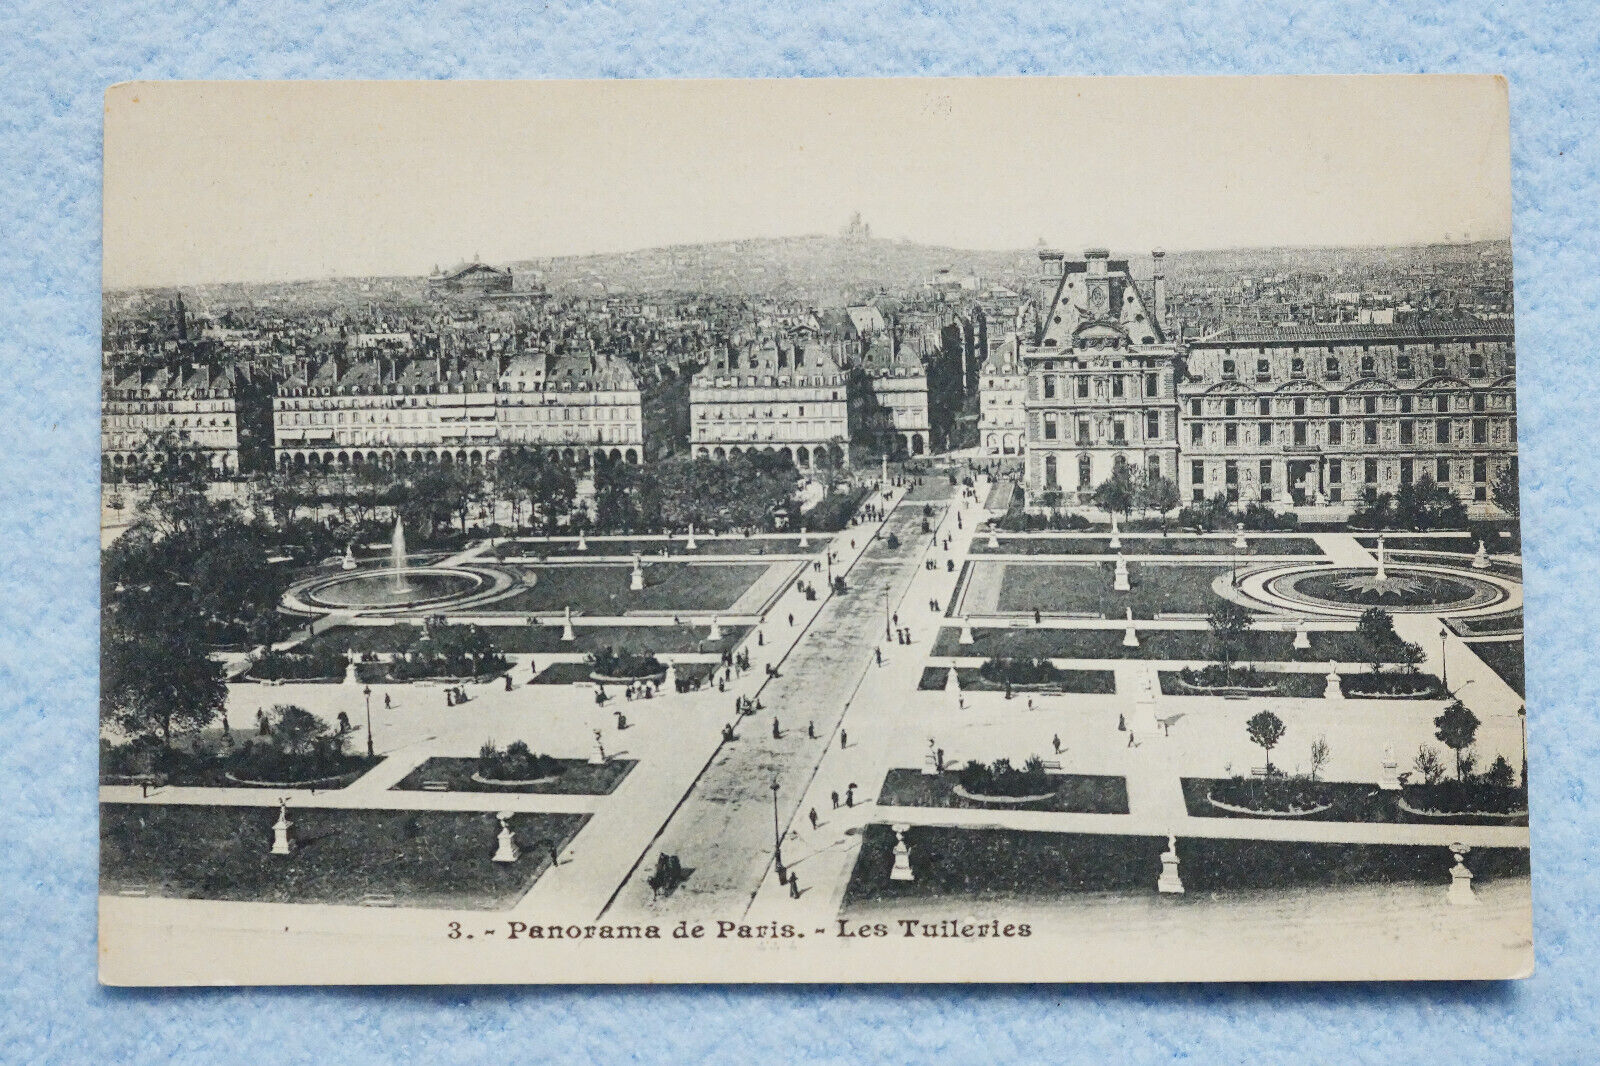 Panorama de Paris - Les Tuileries Garden - France